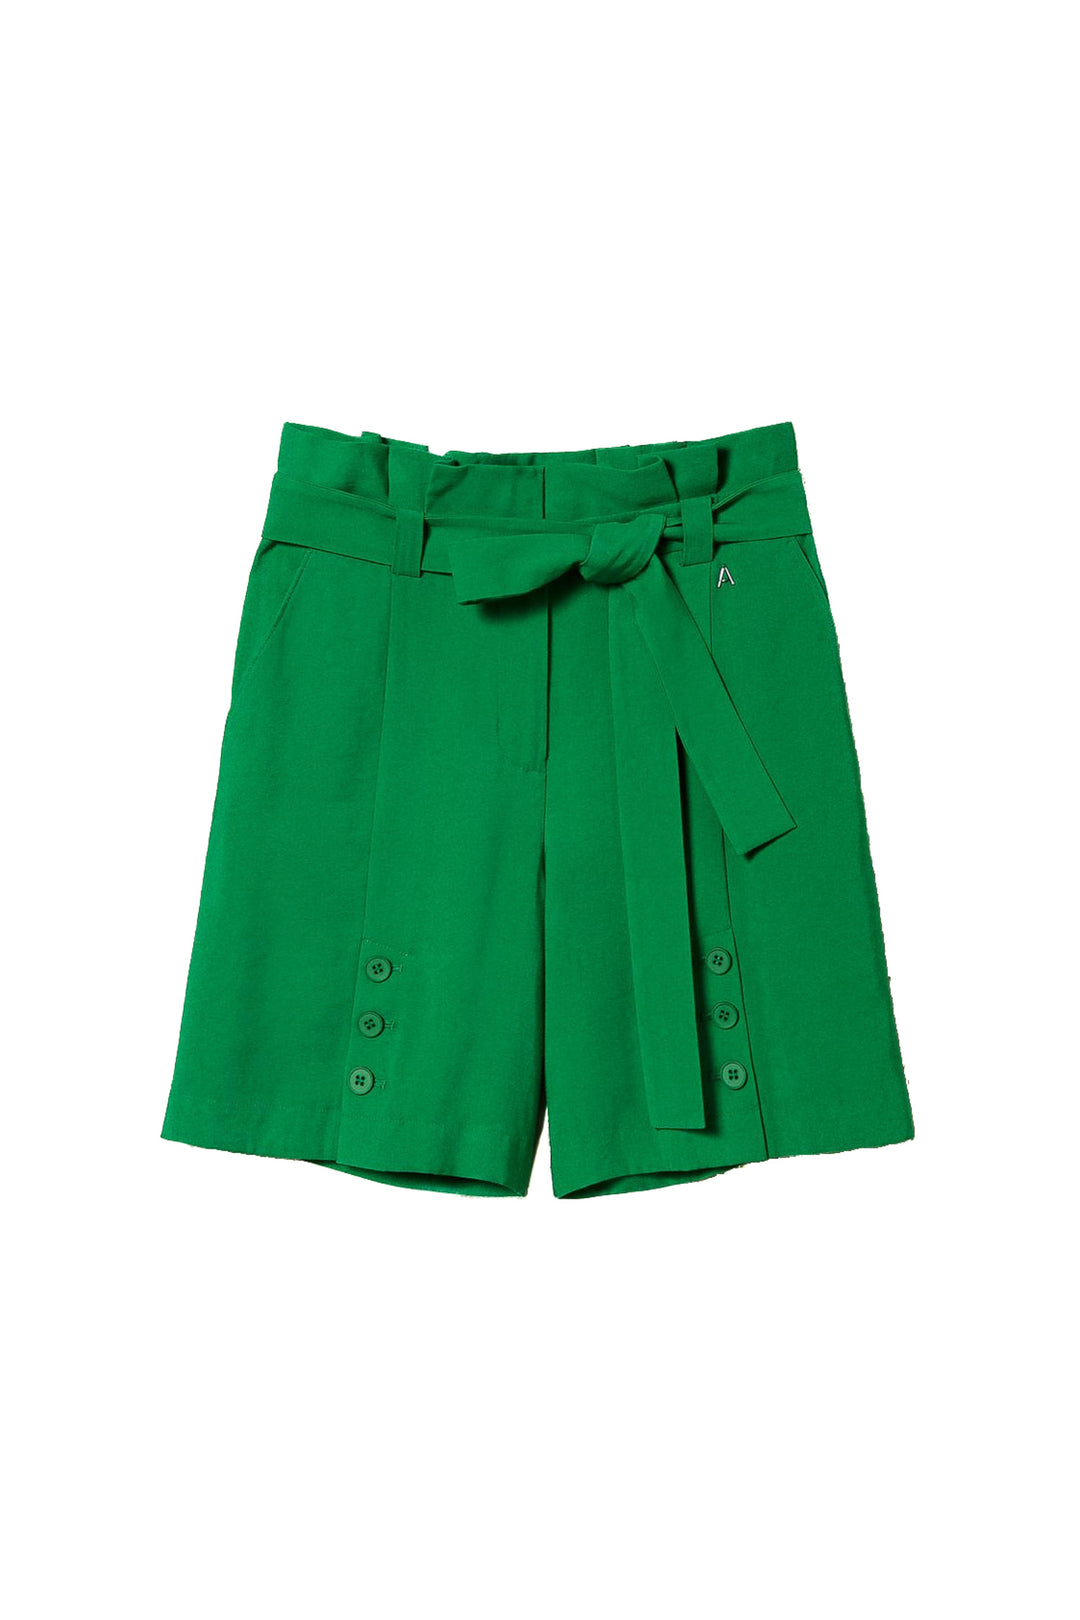 ACTITUDE TWINSET Shorts a vita alta verdi con cintura - Mancinelli 1954